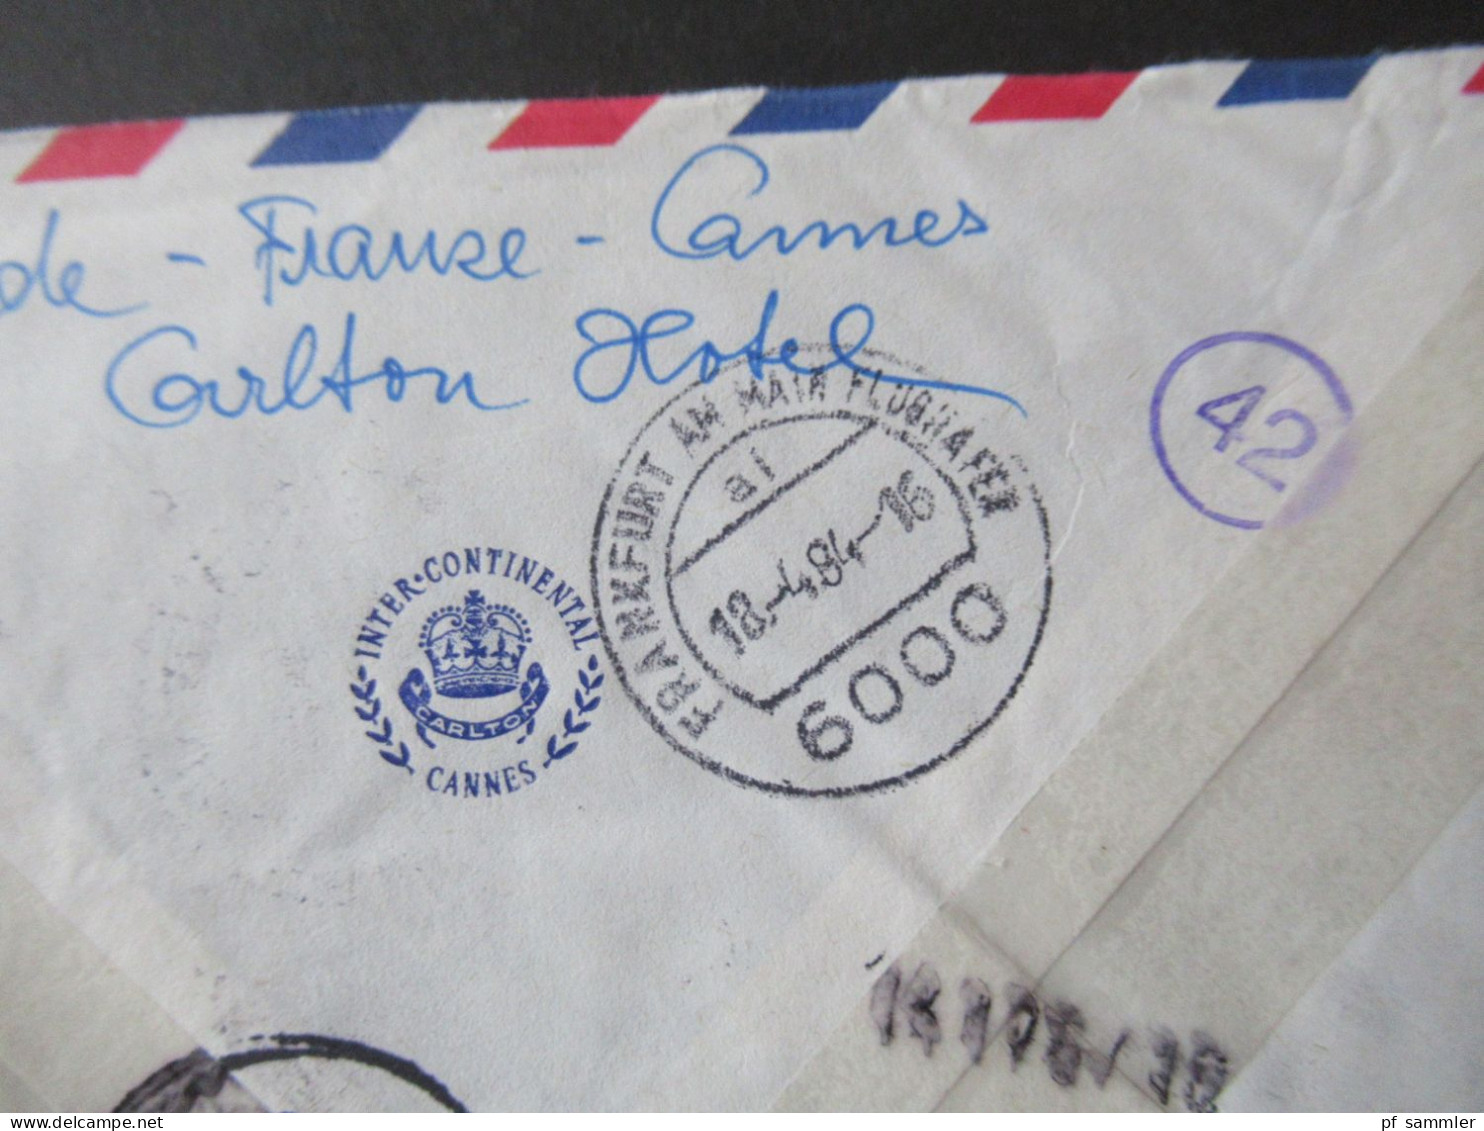 Frankreich 1984 Par Avion Expres Cannes - Kassel / Stempel Frankfurt Am Main Flughafen / Umschlag Inter Continental - Briefe U. Dokumente